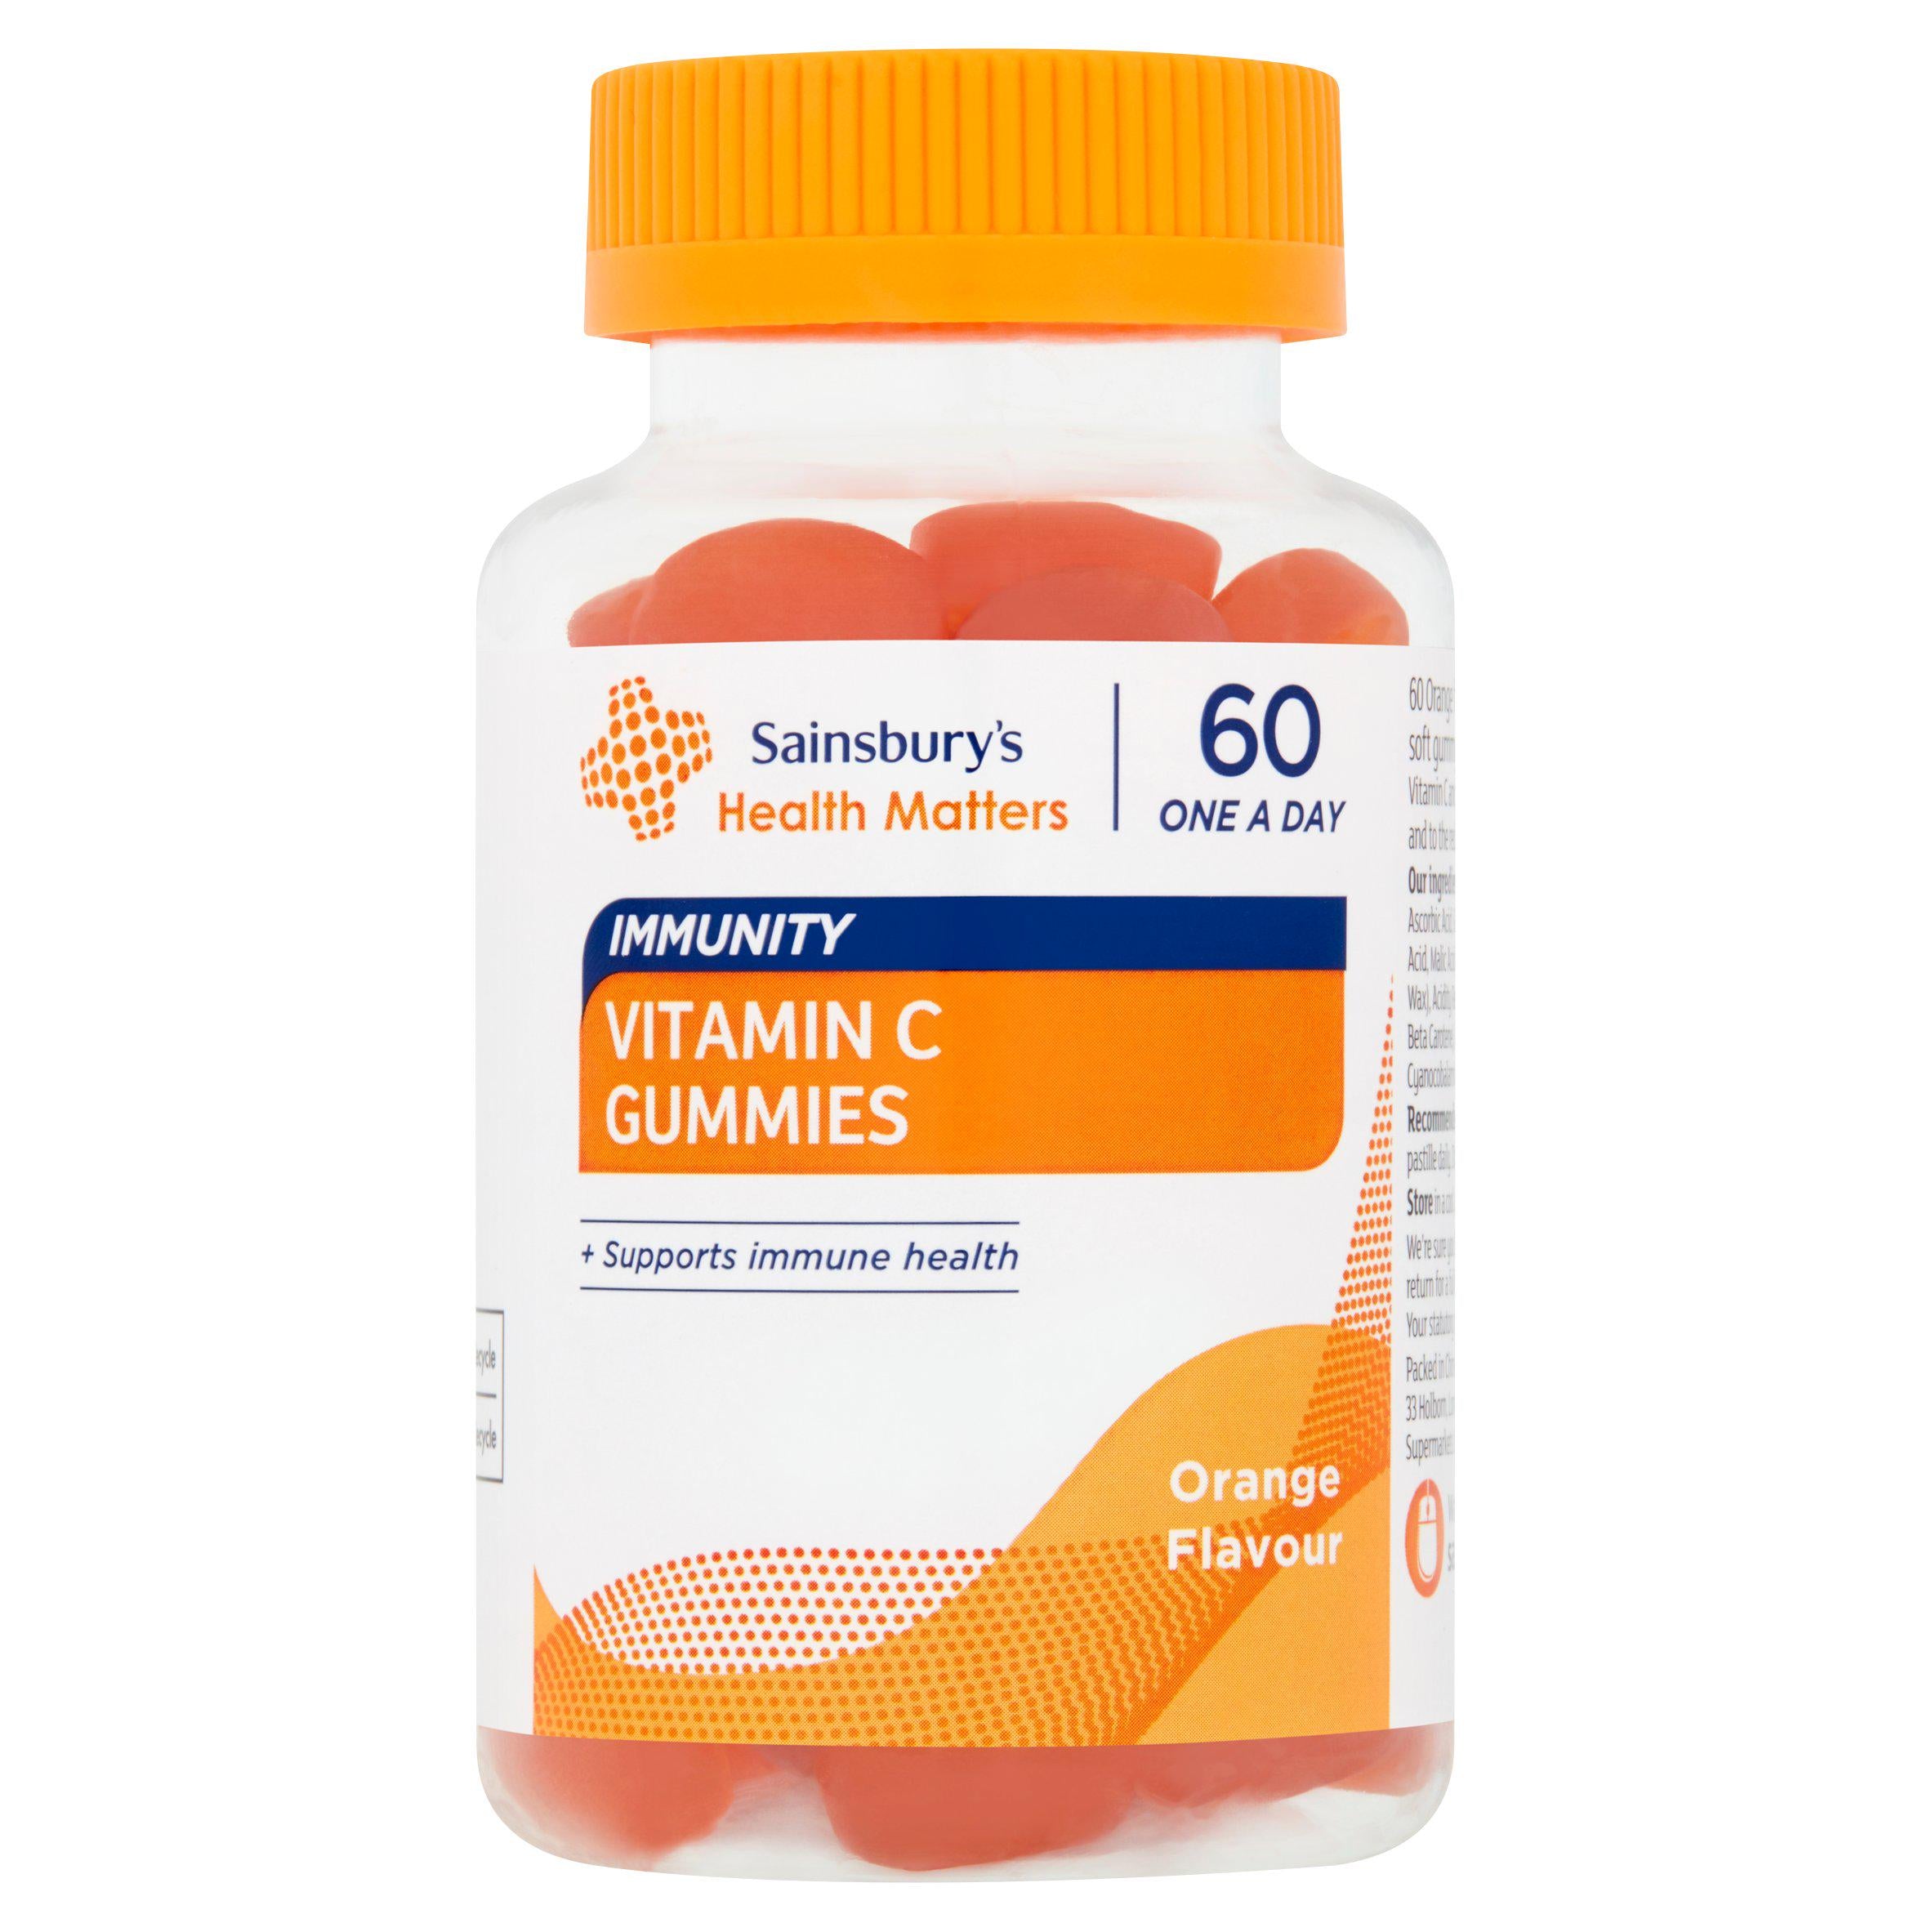 Sainsbury's Health Matters Immunity Vitamin C Gummies Orange Flavour Vitamins Minerals & Supplements Sainsburys   